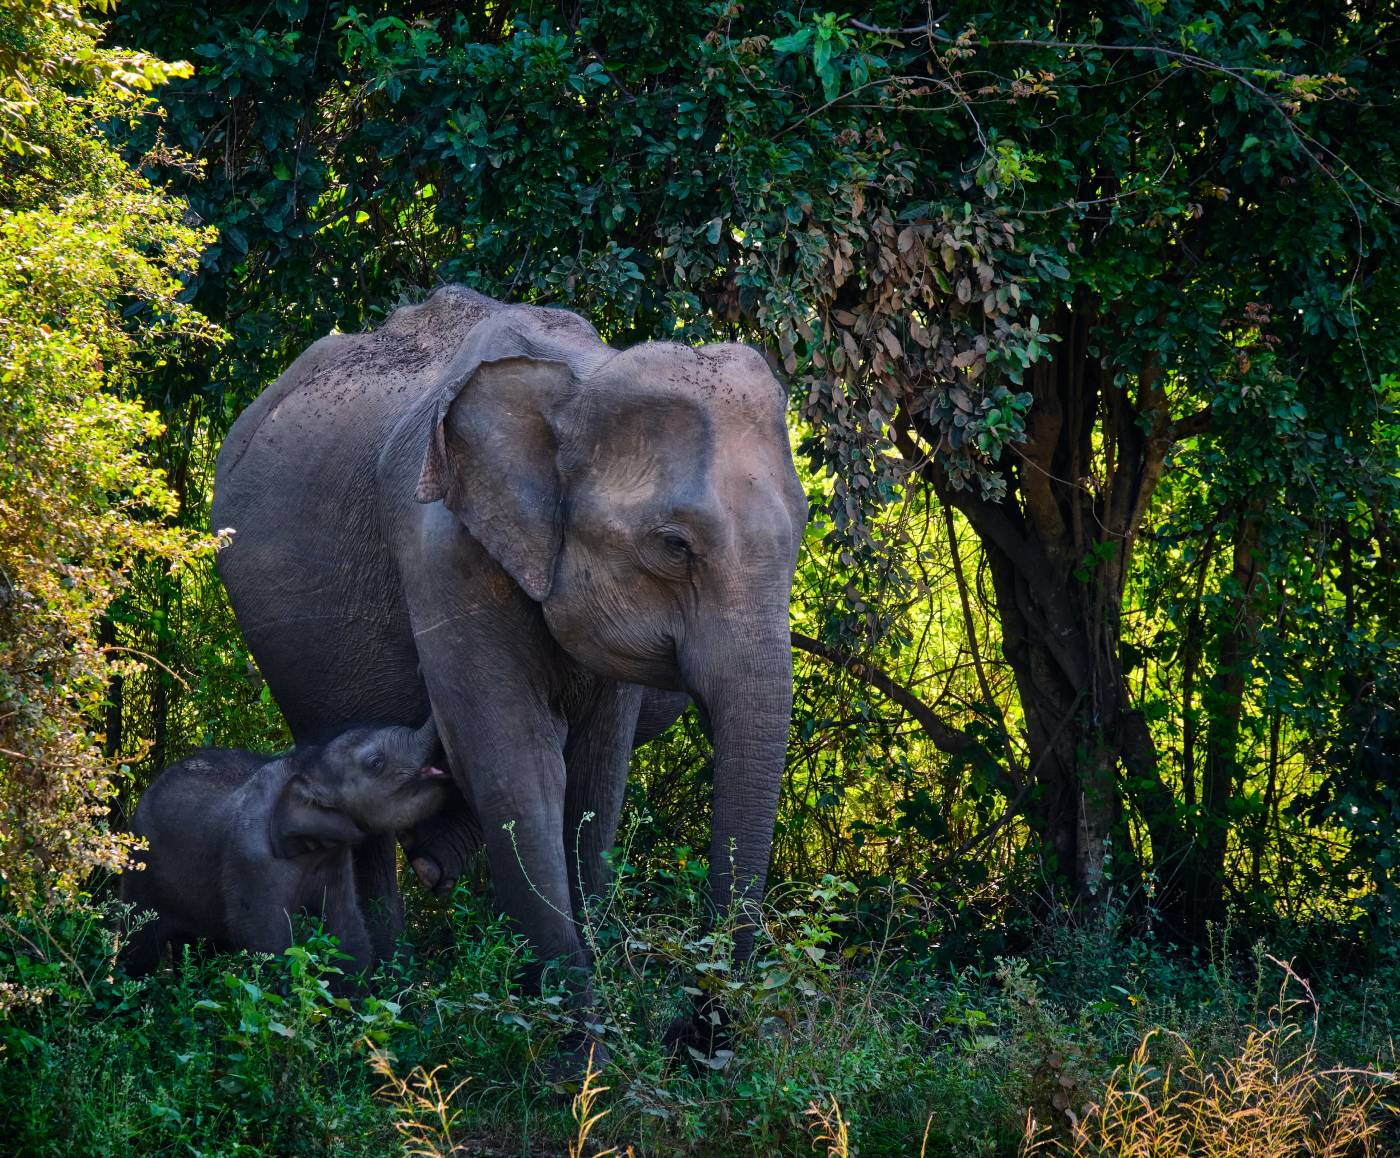 Elephant mother and cub in the Udawalawe Reservoir, Sri Lanka. Image credit: Riccardo Chiarini, Unsplash